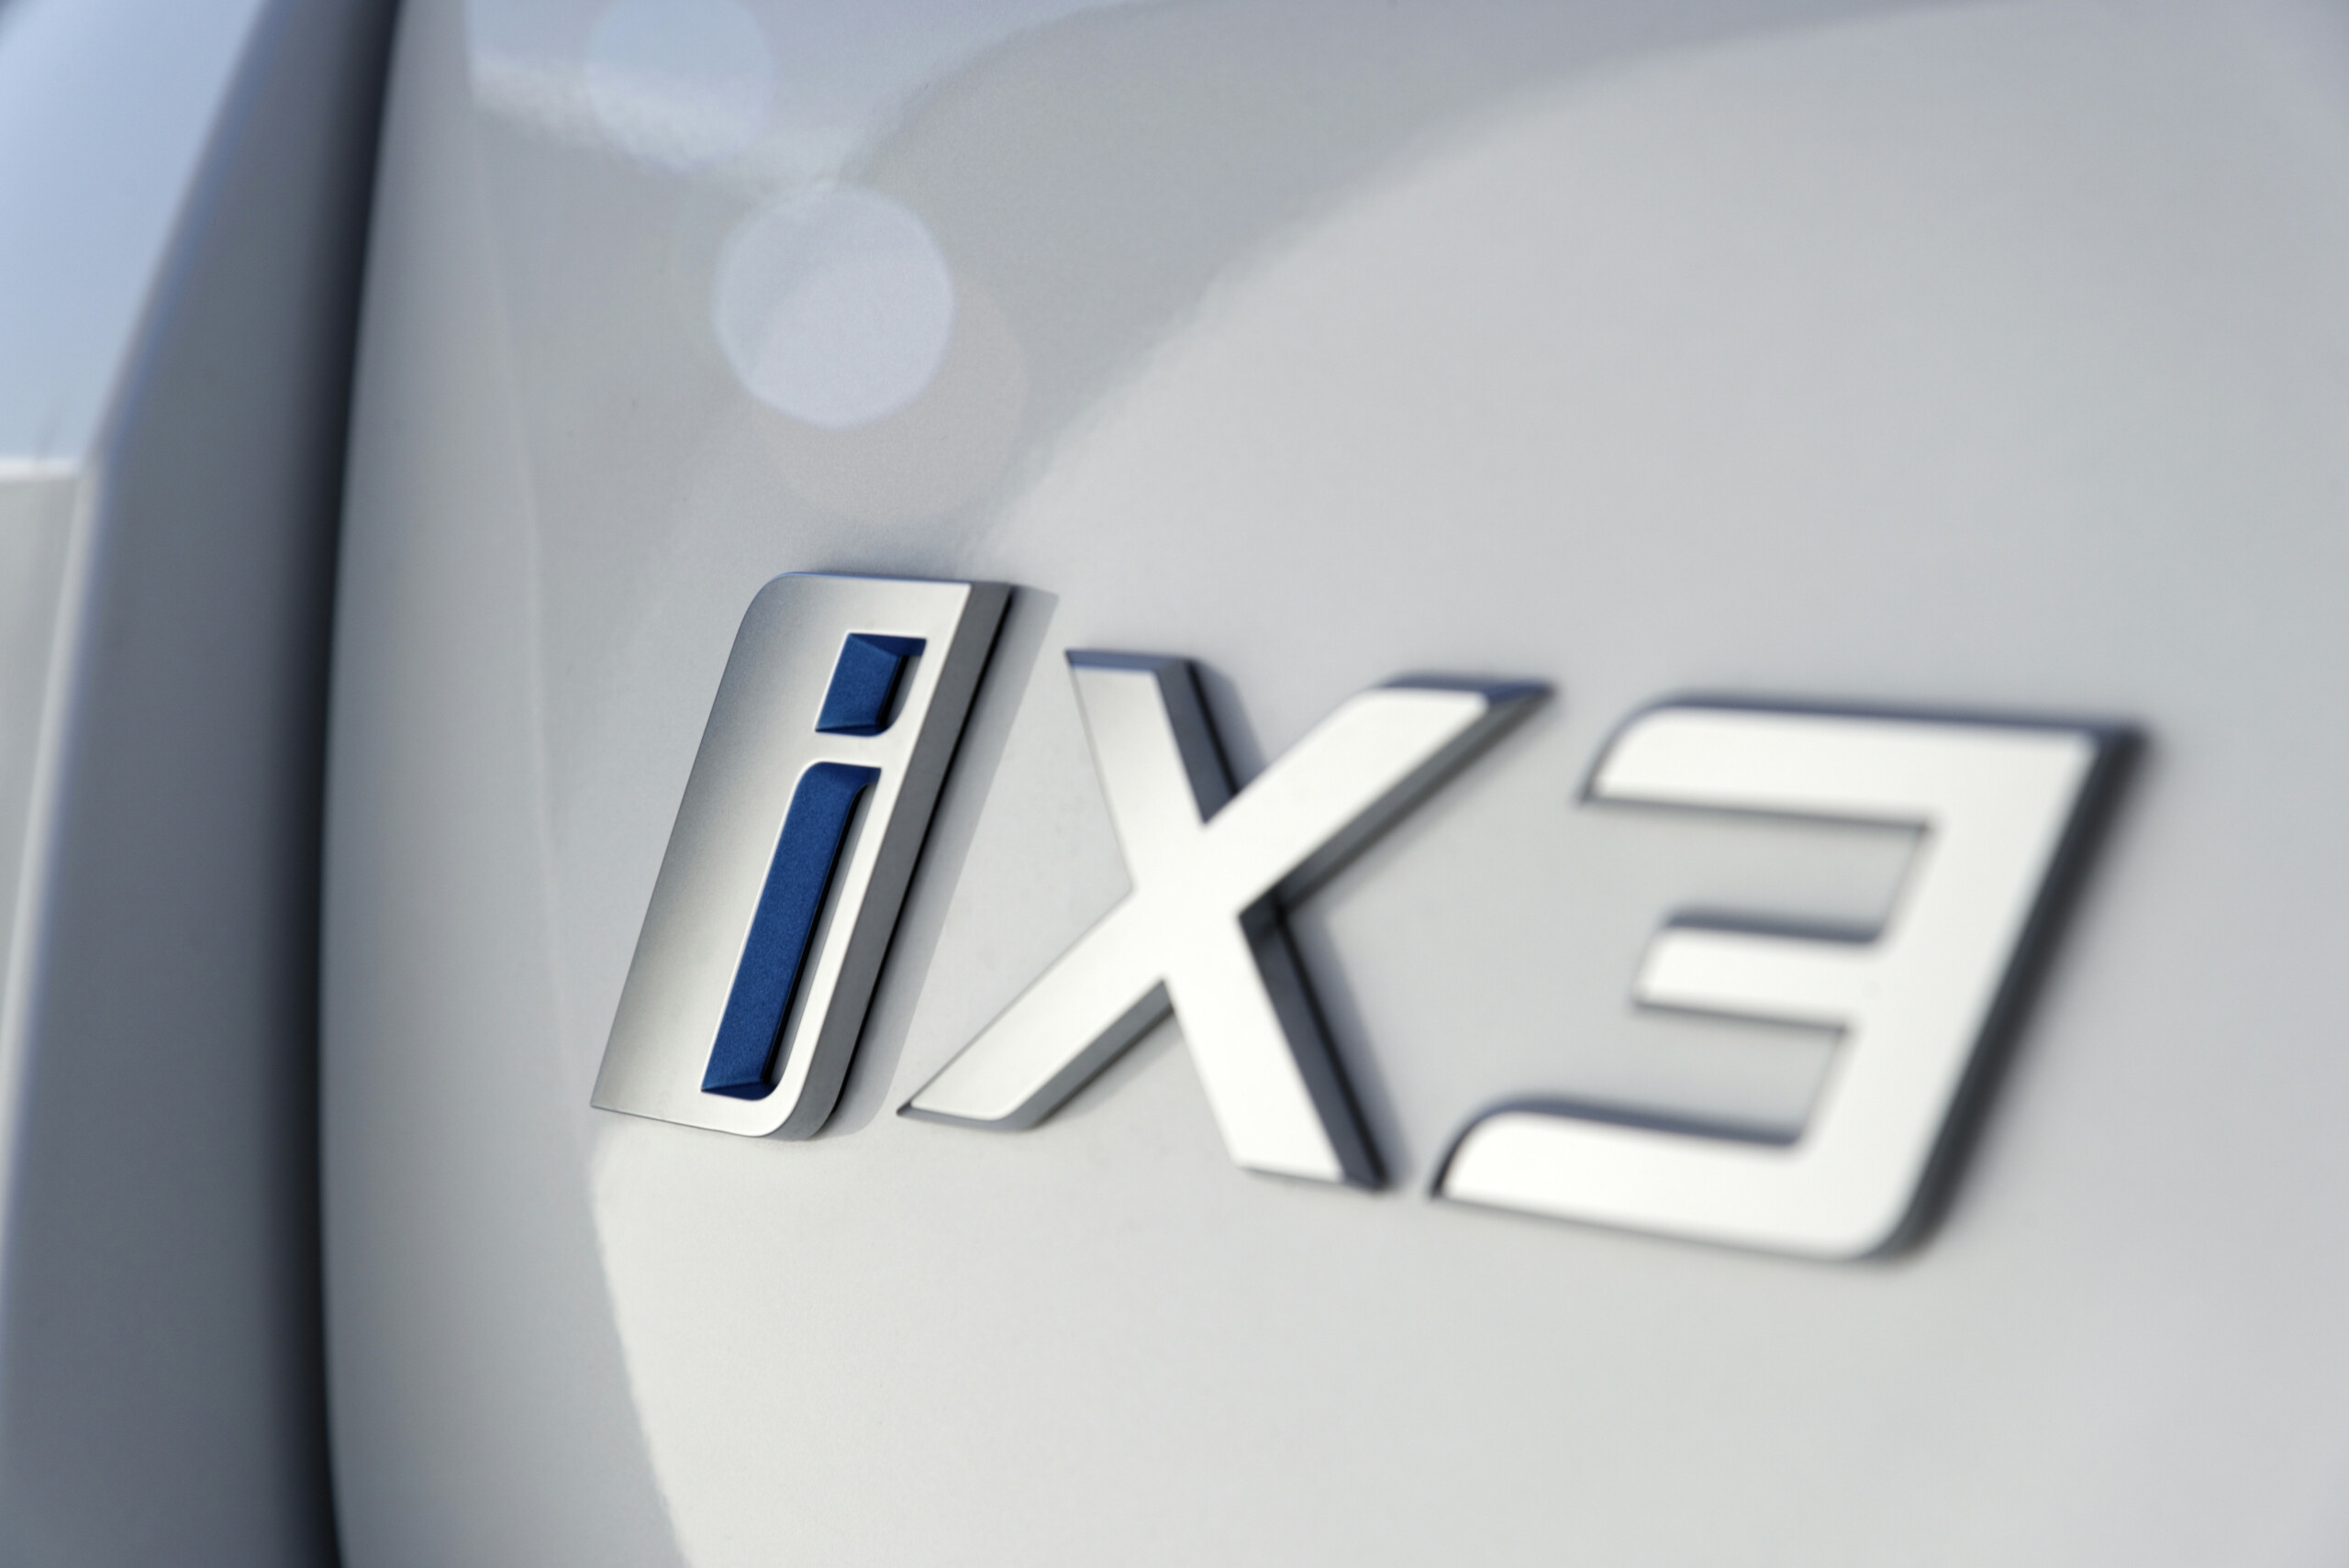 Le BMW iX3 // Source : BMW France